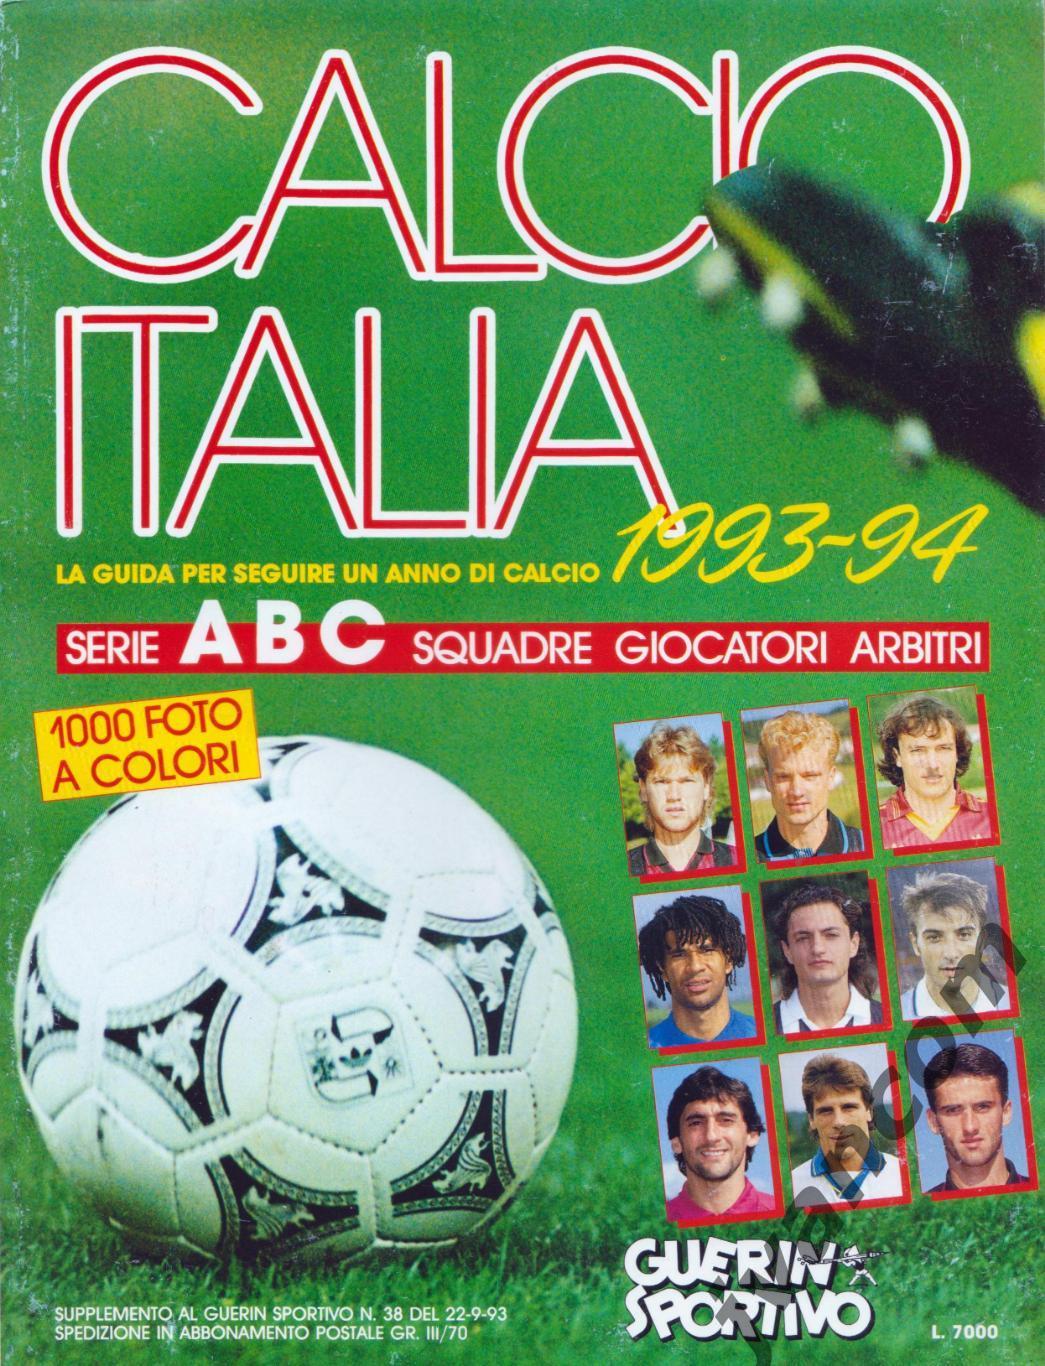 CALCIOITALIA 1993-94. Чемпионат Италии по футболу. Превью сезона 1993-94.